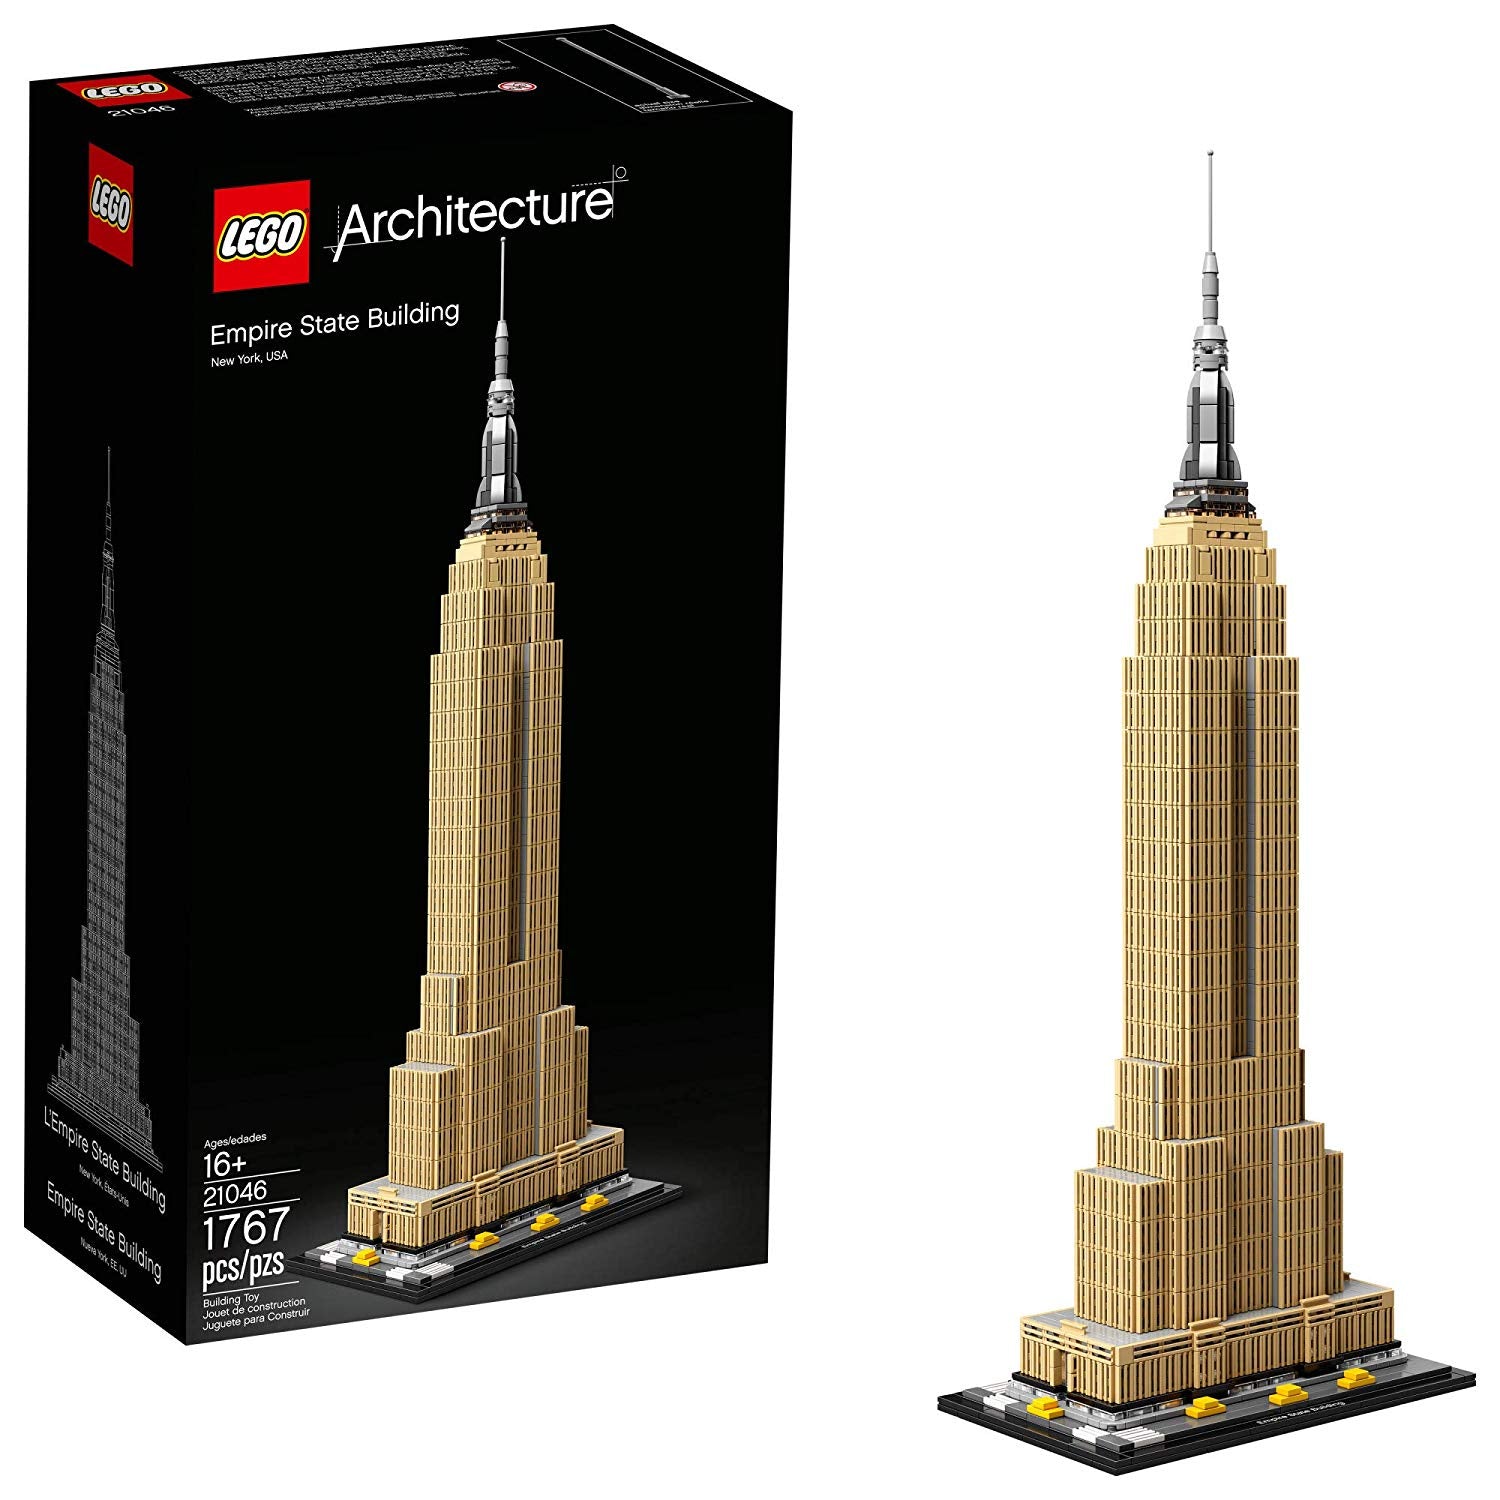 Lego Architecture: Empire State Building 21046